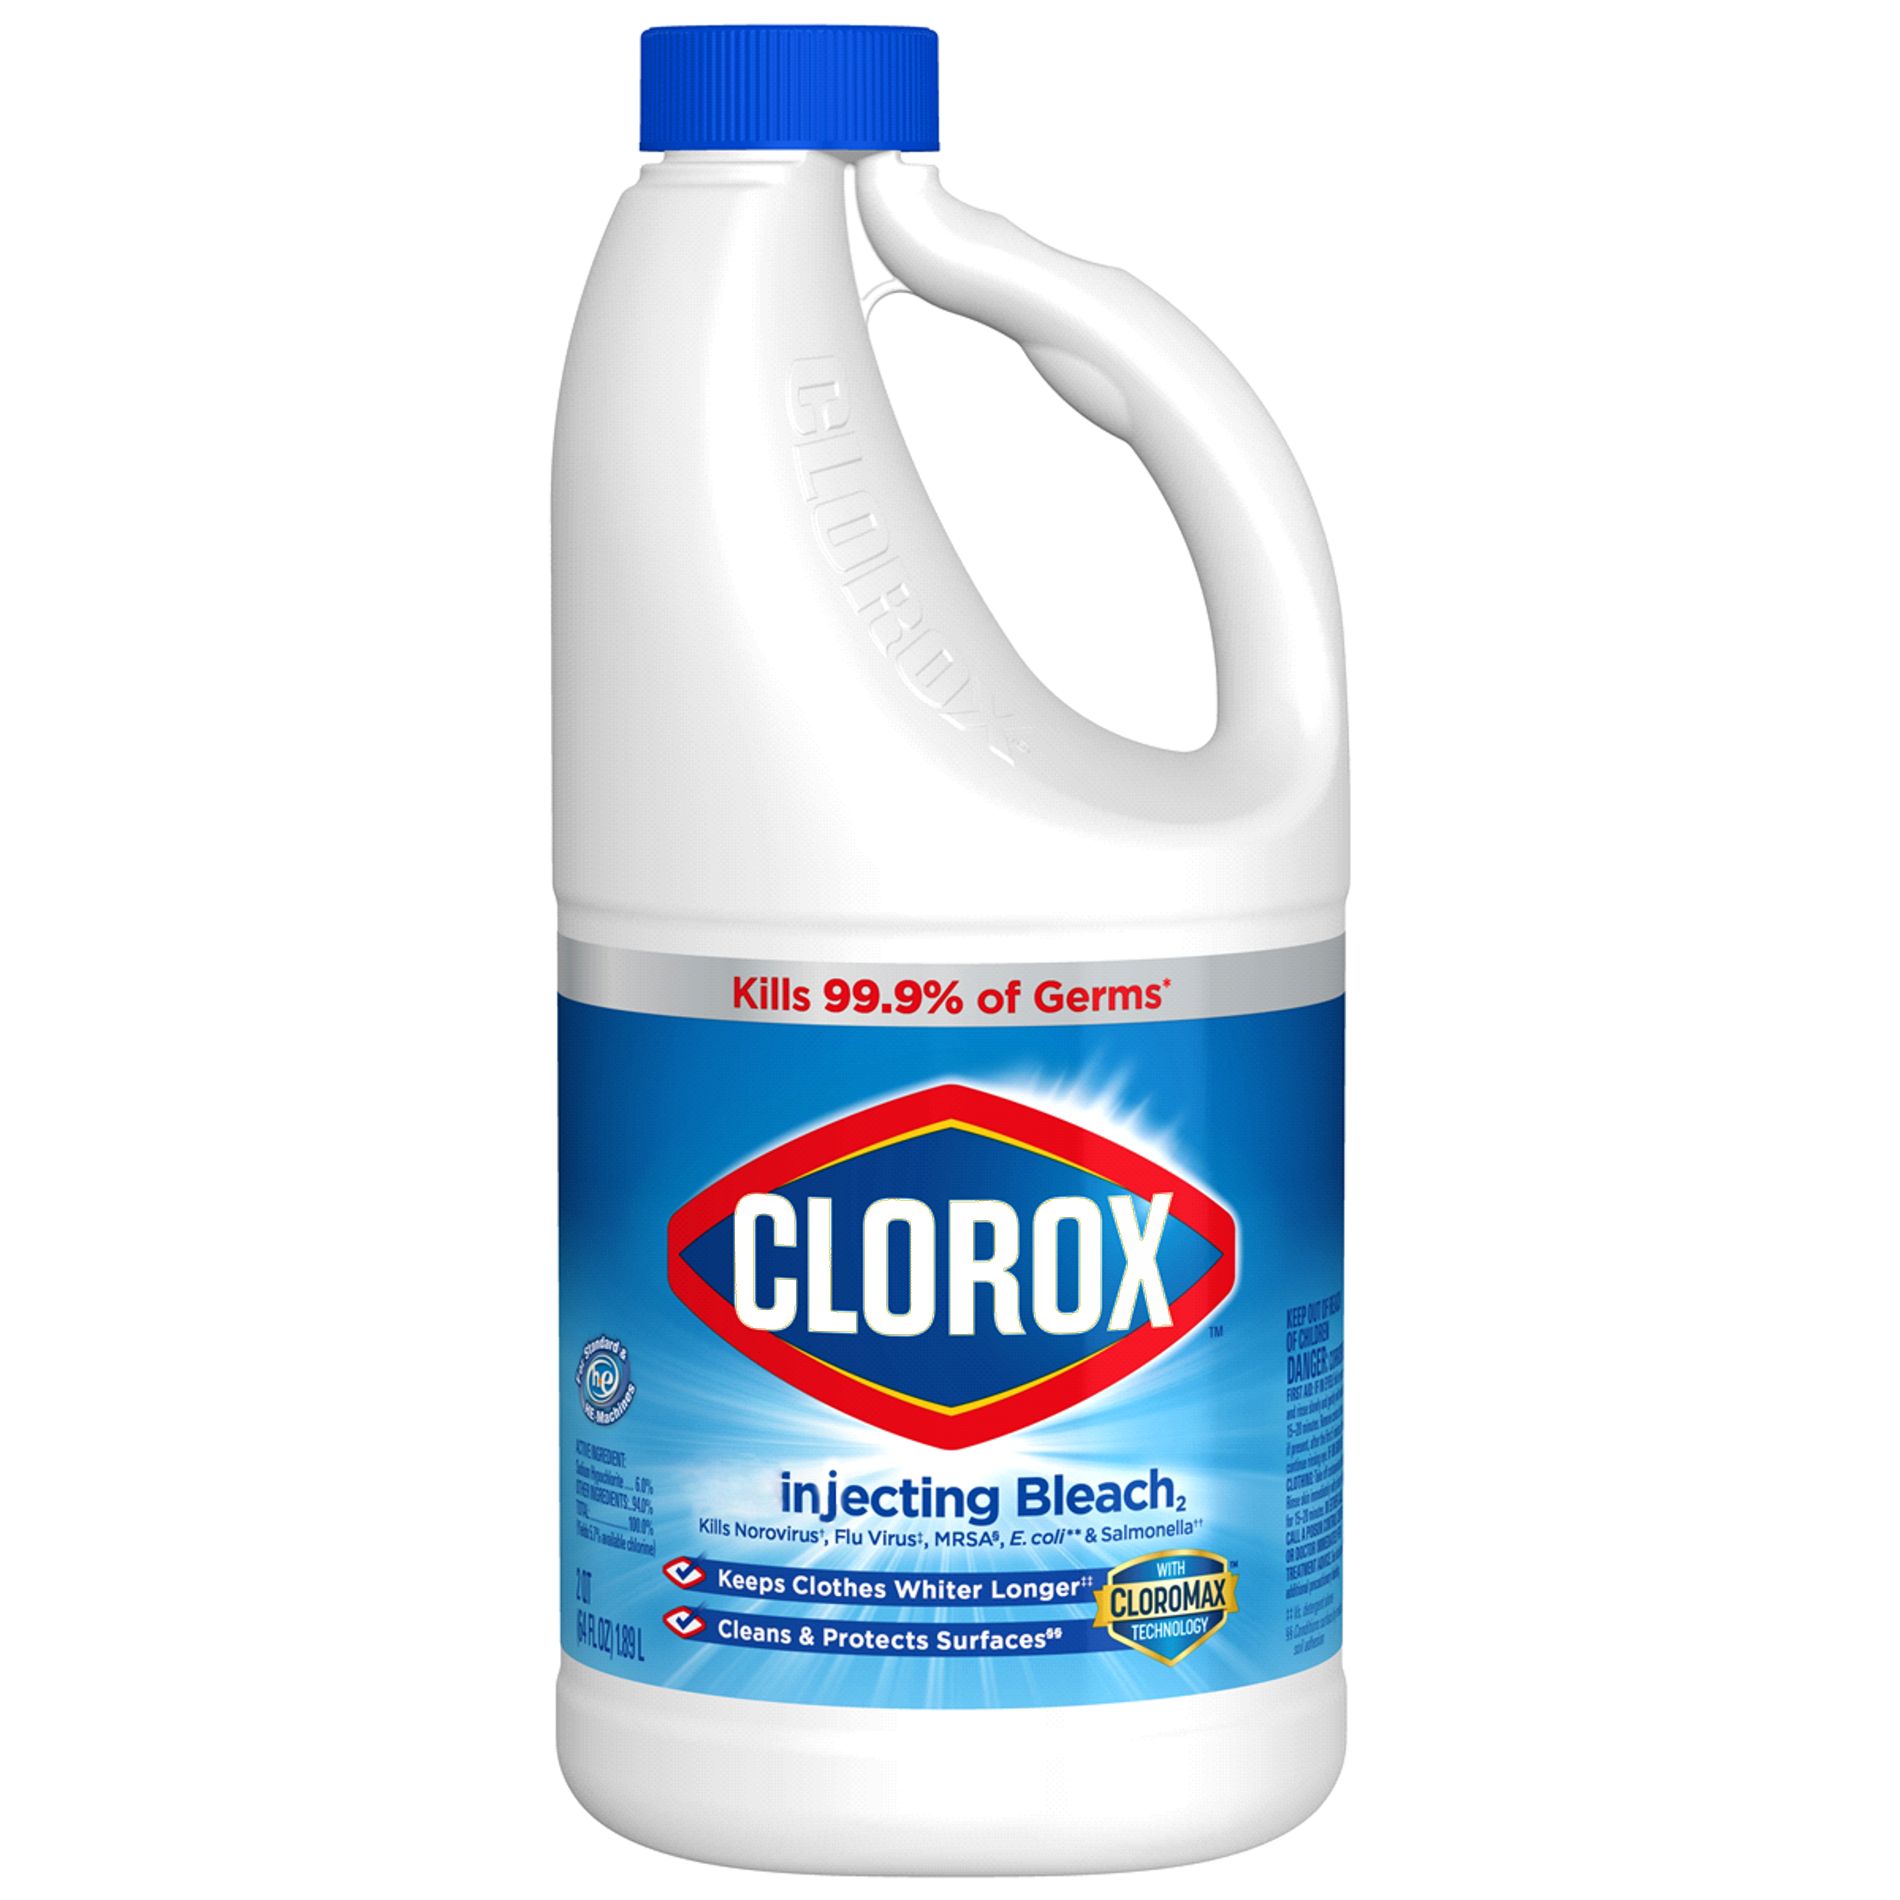 Clorox injecting bleach Blank Meme Template